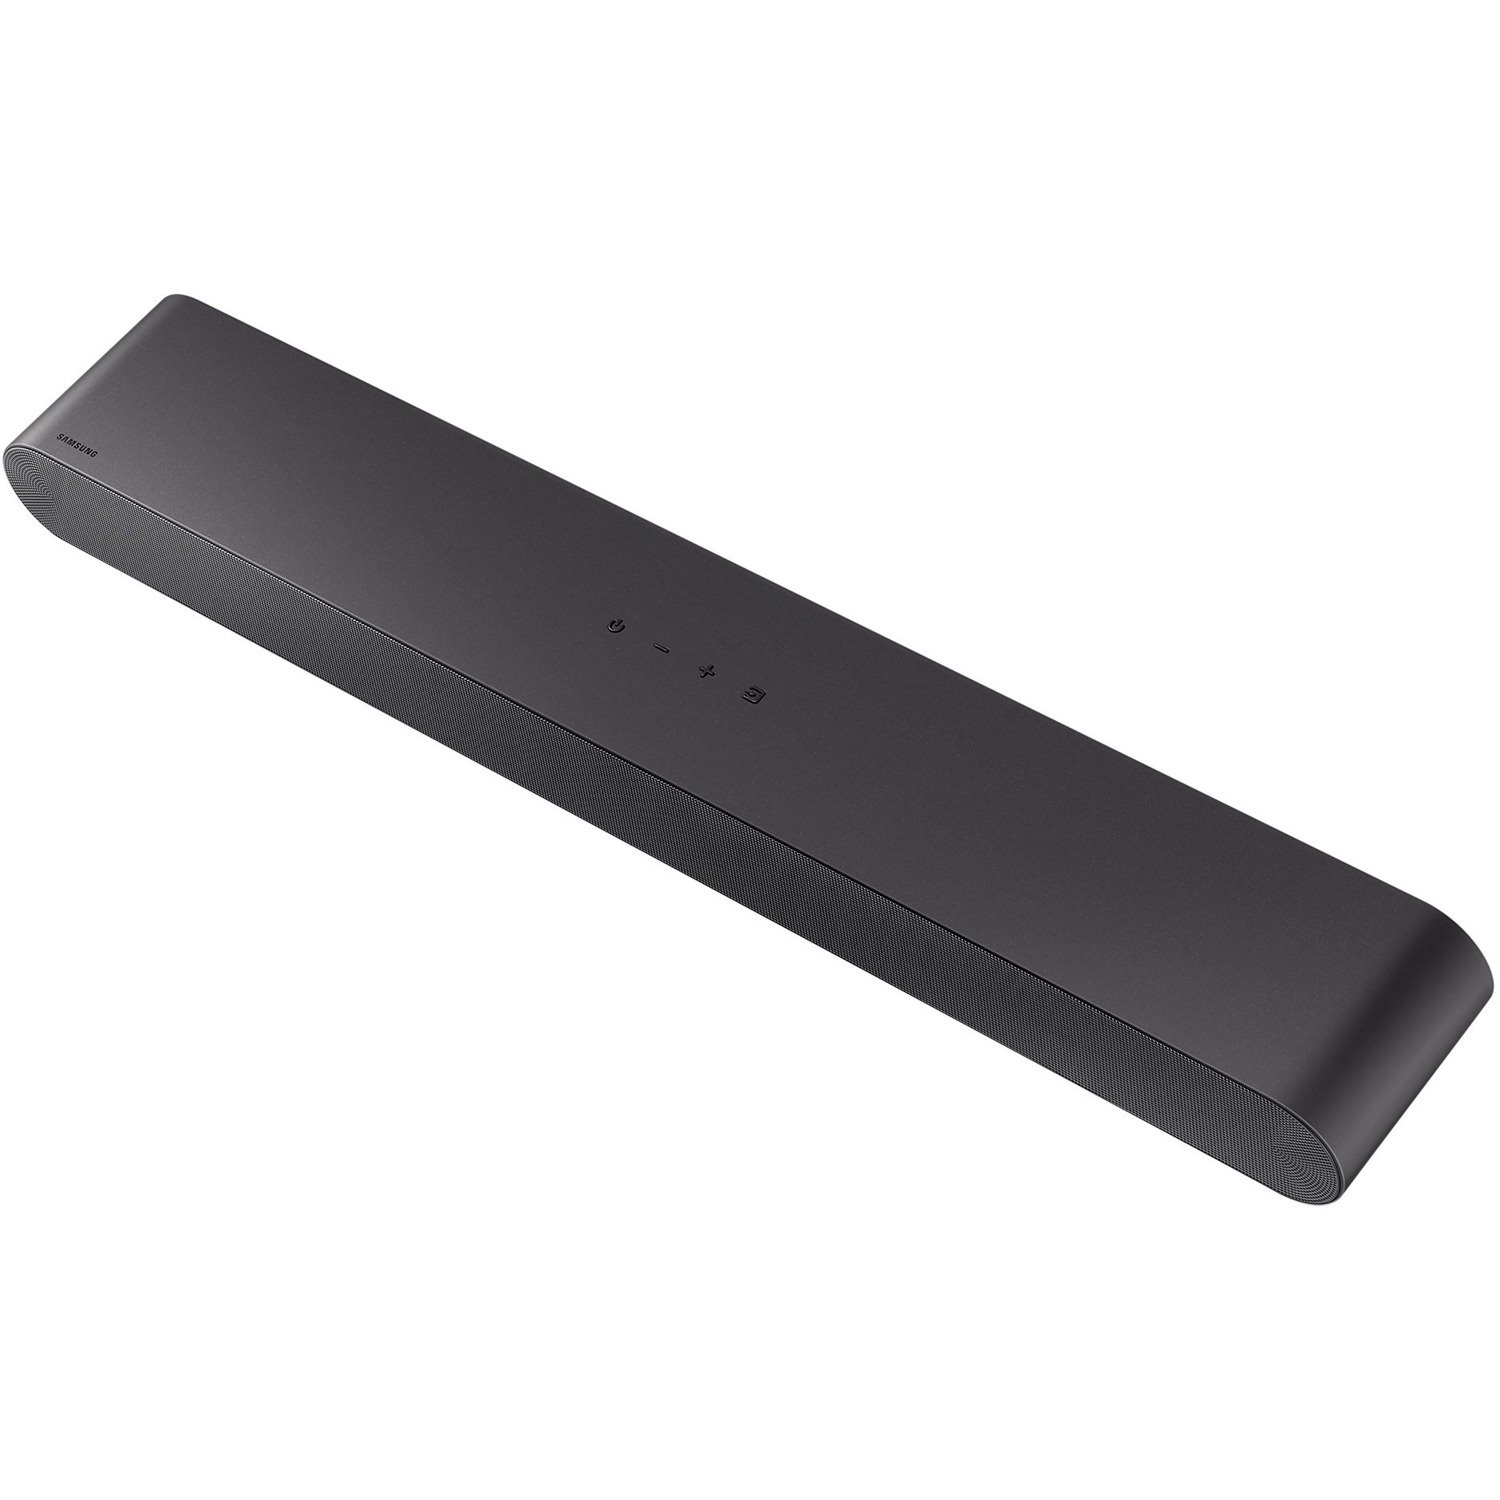 Samsung HW-S50B 3.0 Bluetooth Sound Bar Speaker - 140 W RMS